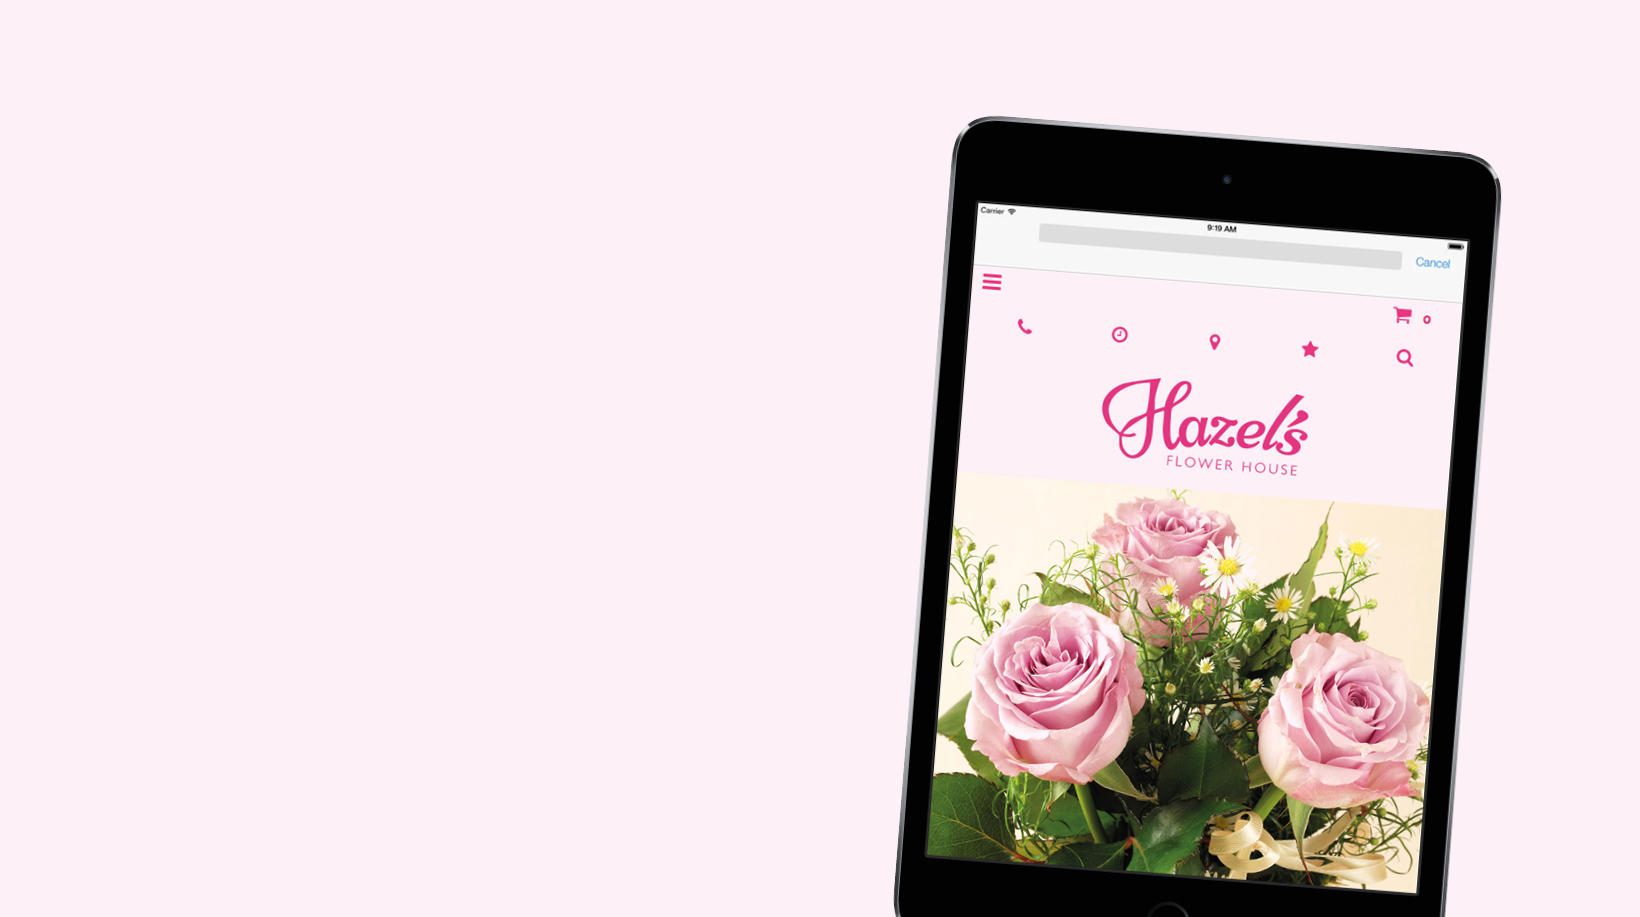 Hazel's Florist Website by Direct2Florist